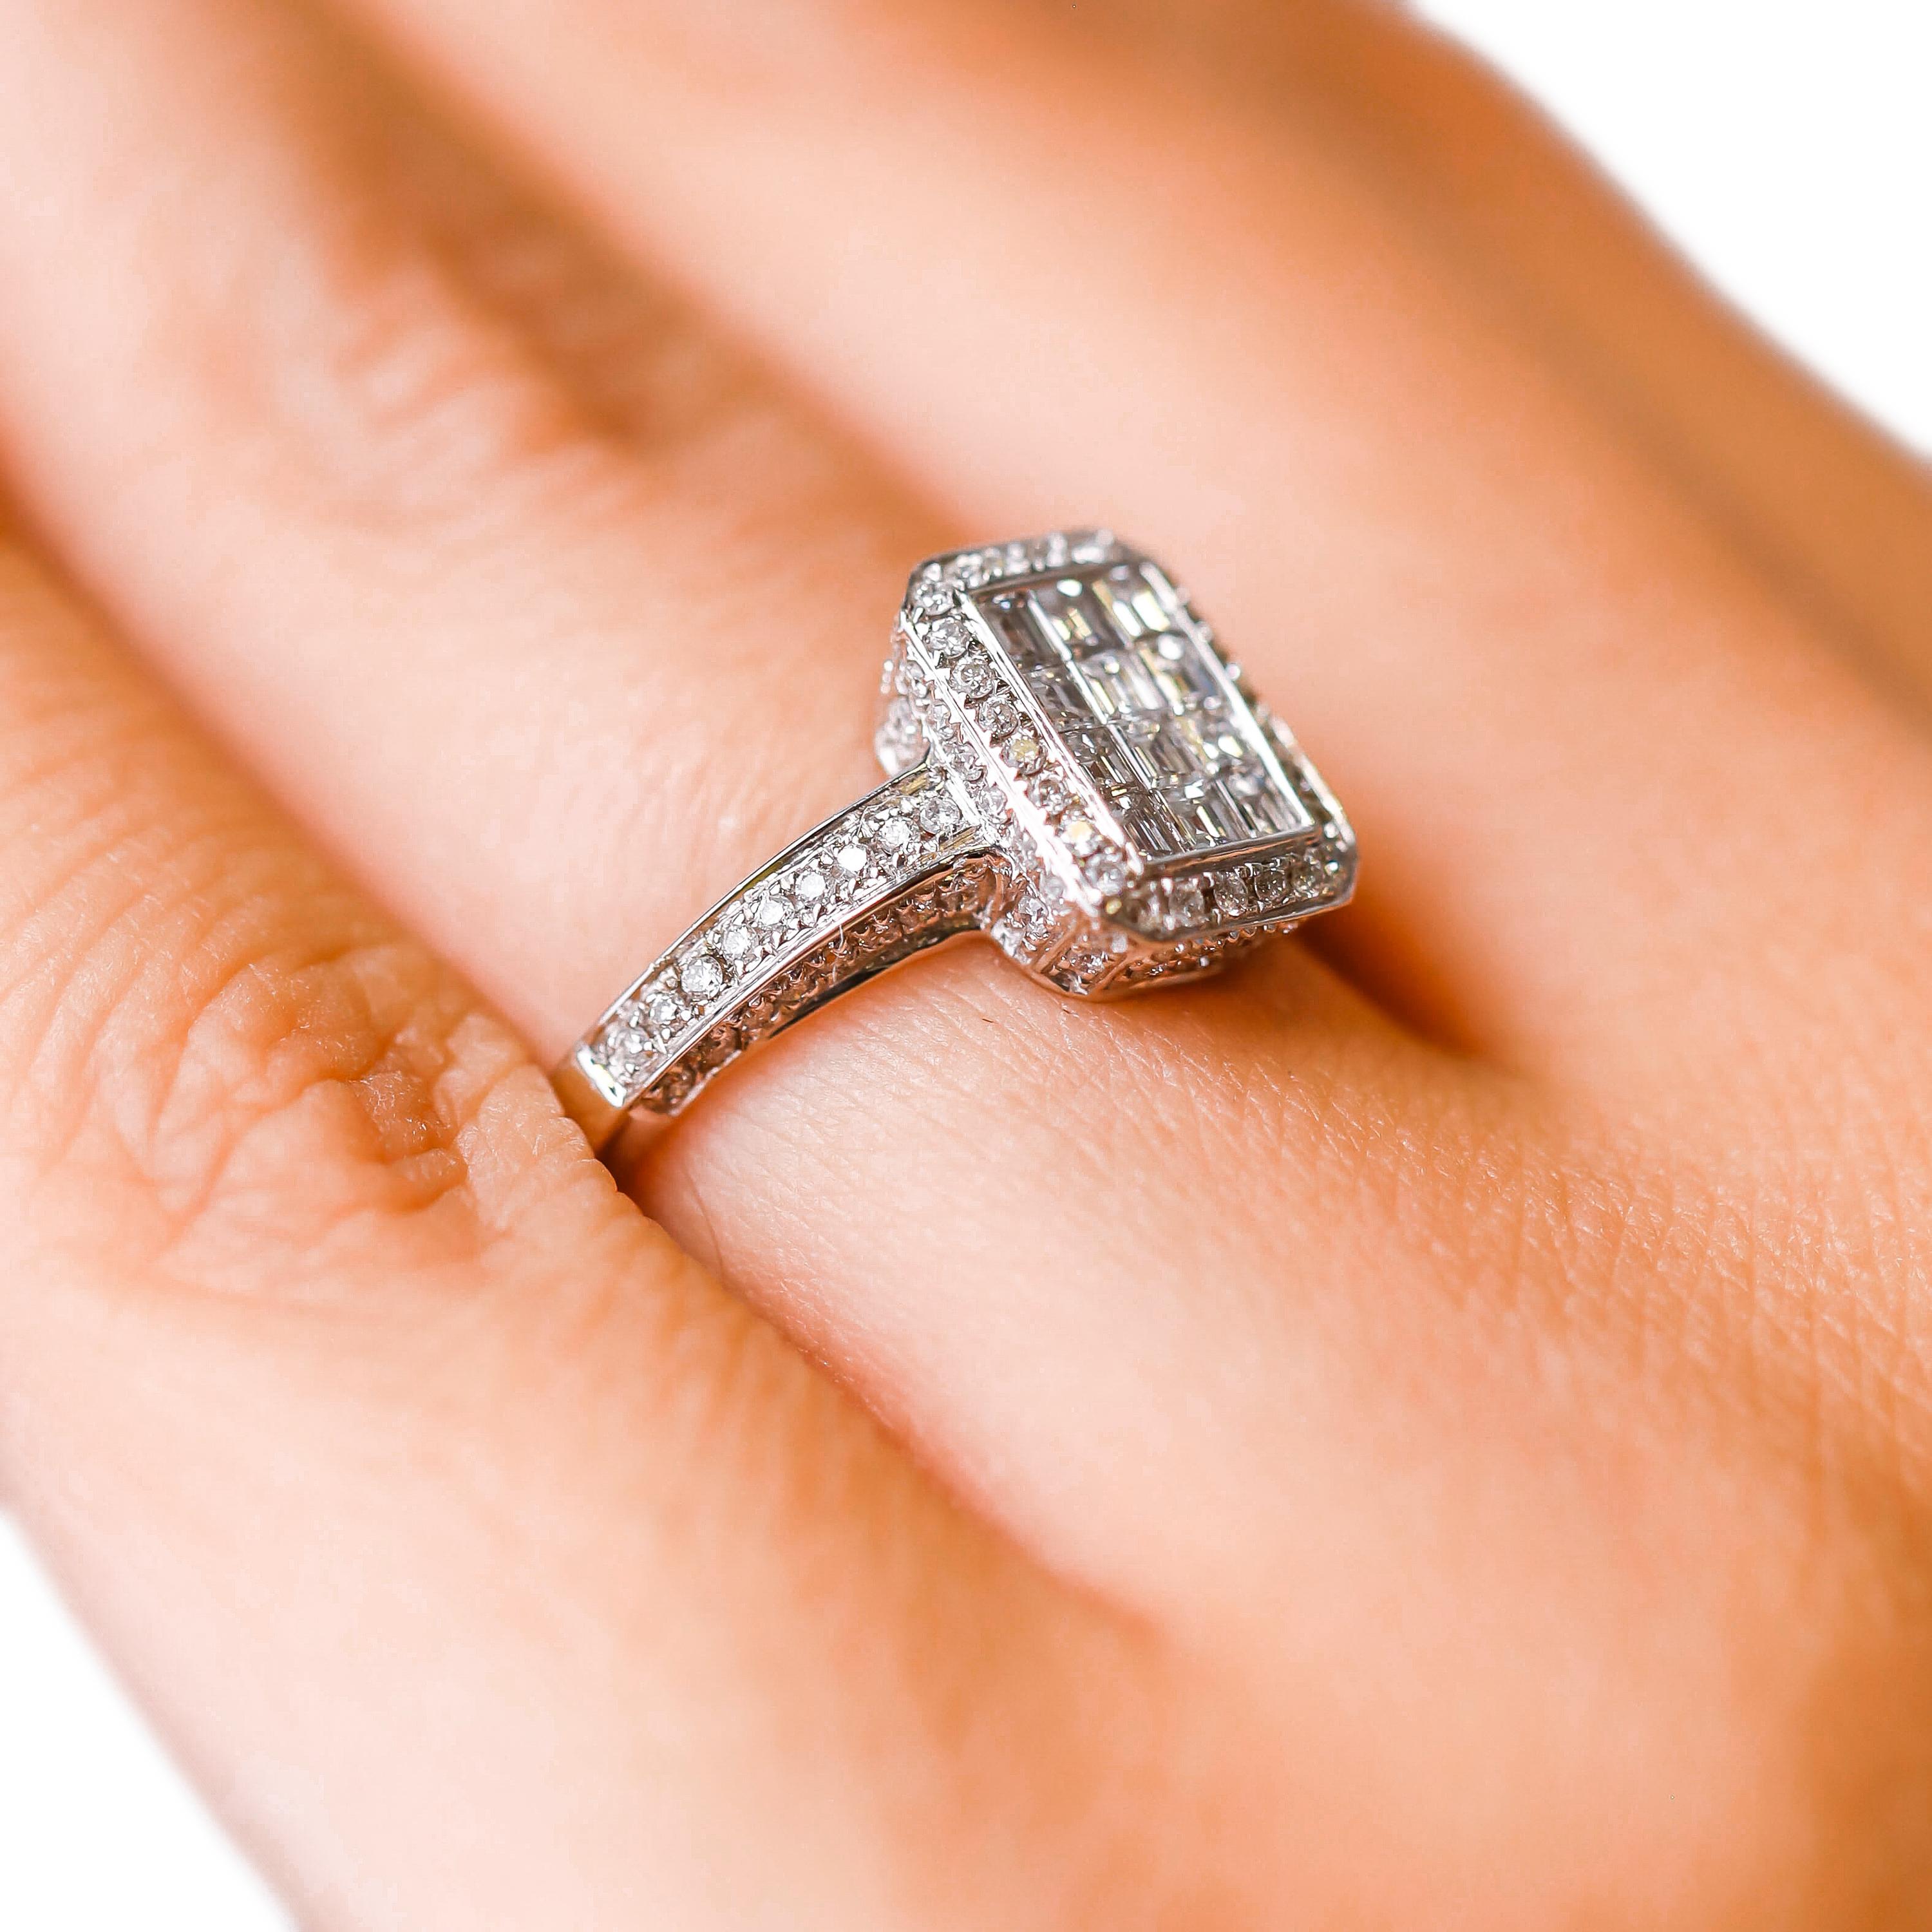 Gregg Ruth 18k White Gold 1.0 Carat Princess Cut Diamond Engagement Ring Sz 6.5 For Sale 6